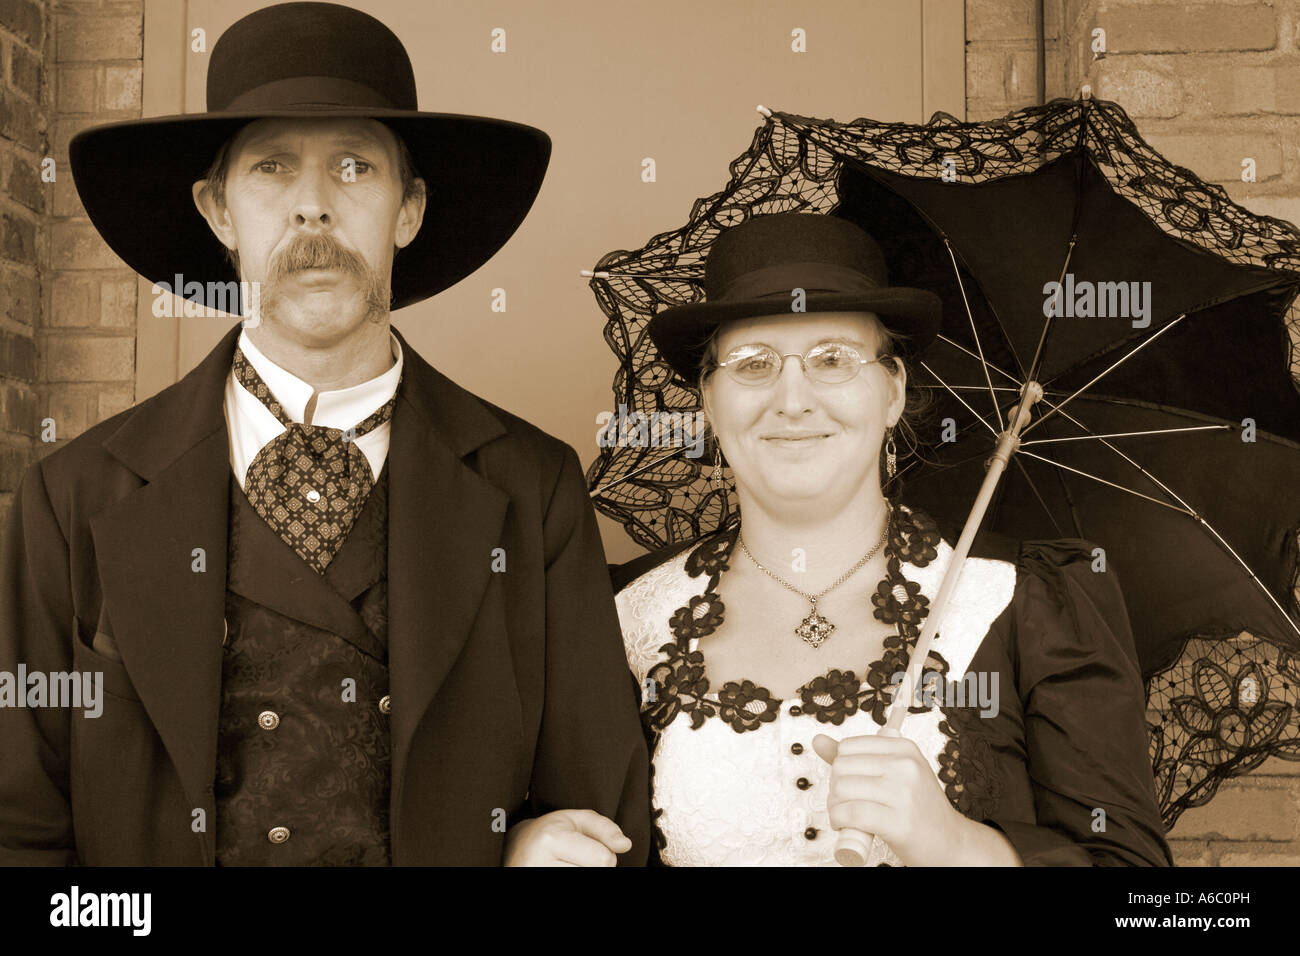 Sepia toned portrait of actors dressed as Wyatt Earp and his wife Josephine. Stock Photo